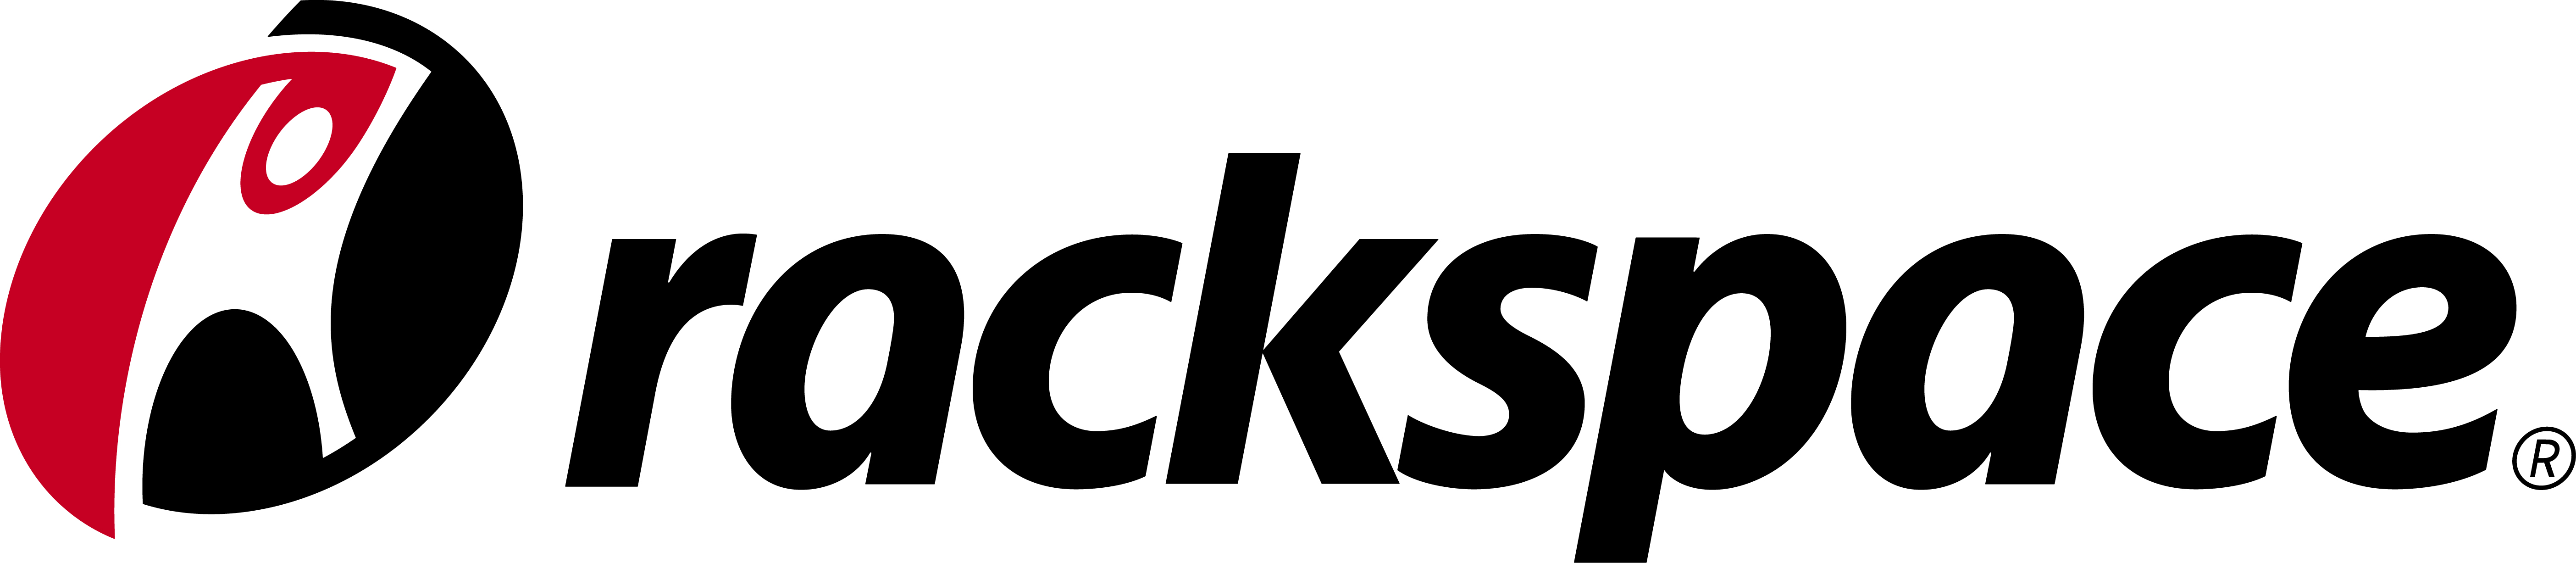 Rackspace Logo - Rackspace Hosting, Transparent background PNG HD thumbnail